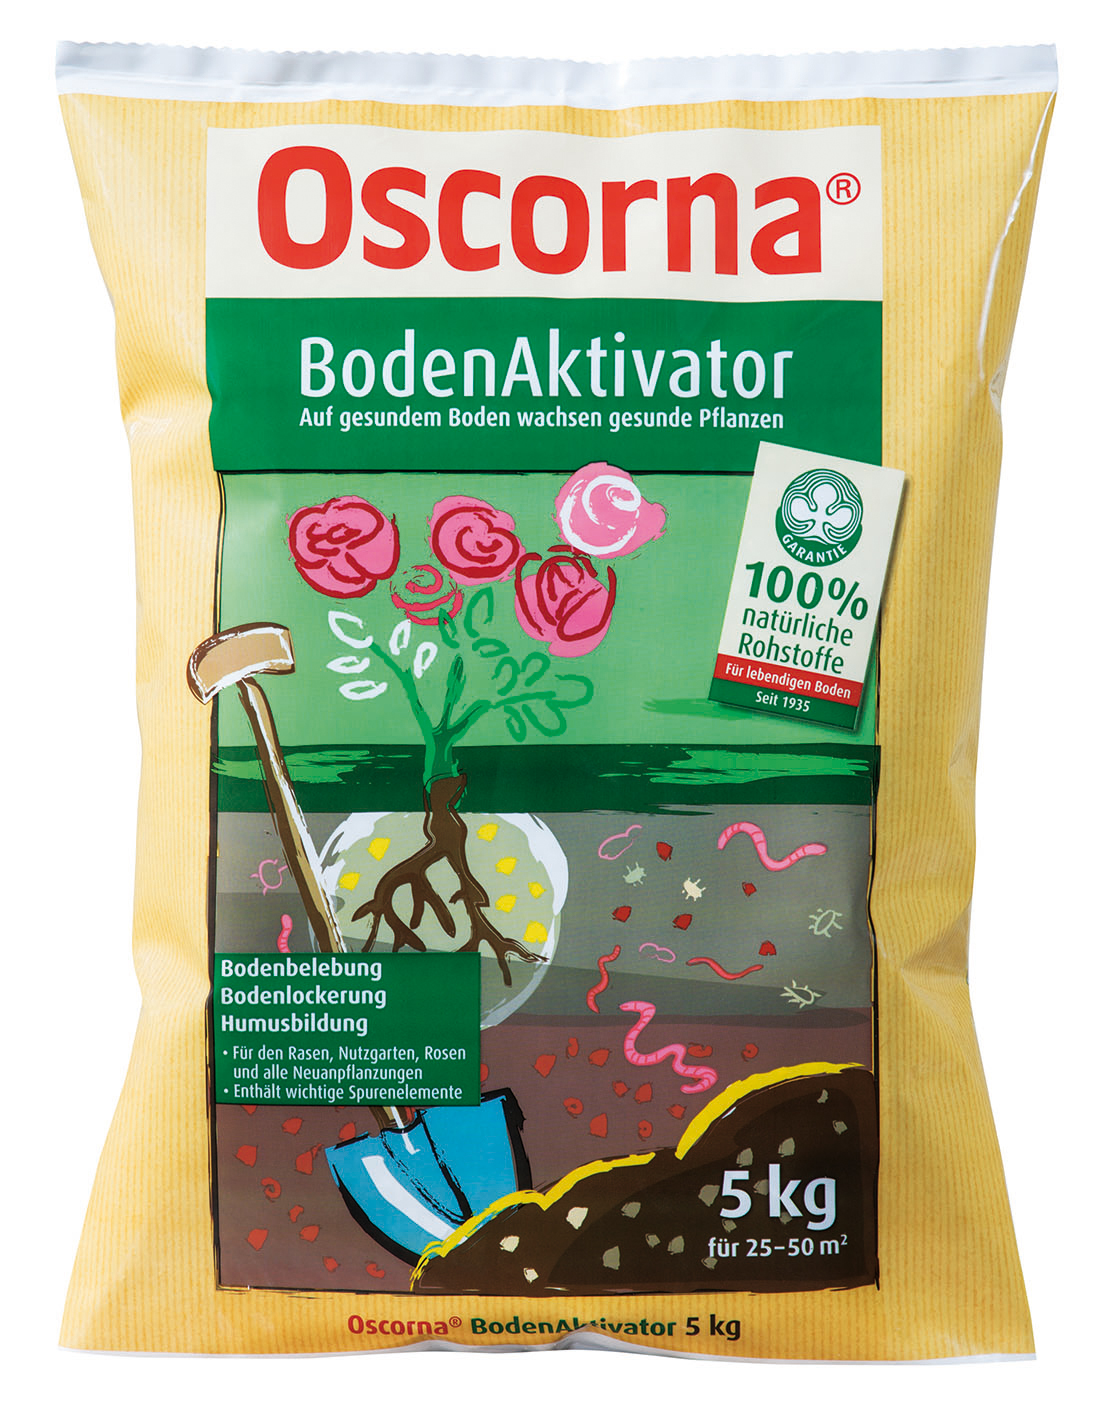 Oscorna-BodenAktivator 5kg - Bodenbelebung ...